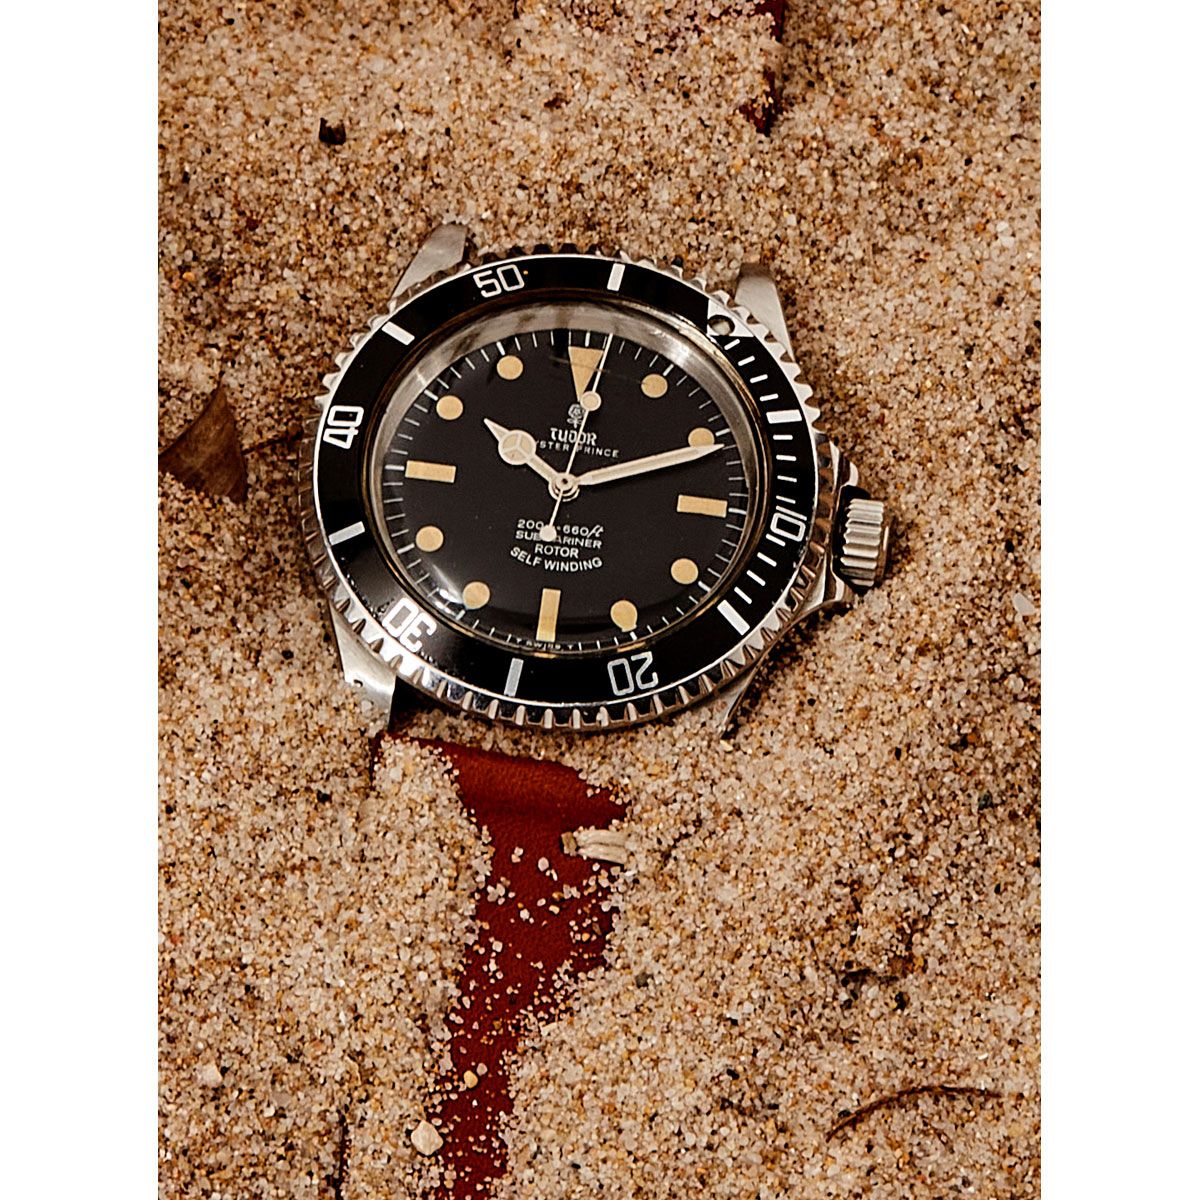 Null Tudor, Submariner, Ref 7016/0, n° 73xxxx, circa 1969


Raro y hermoso reloj&hellip;